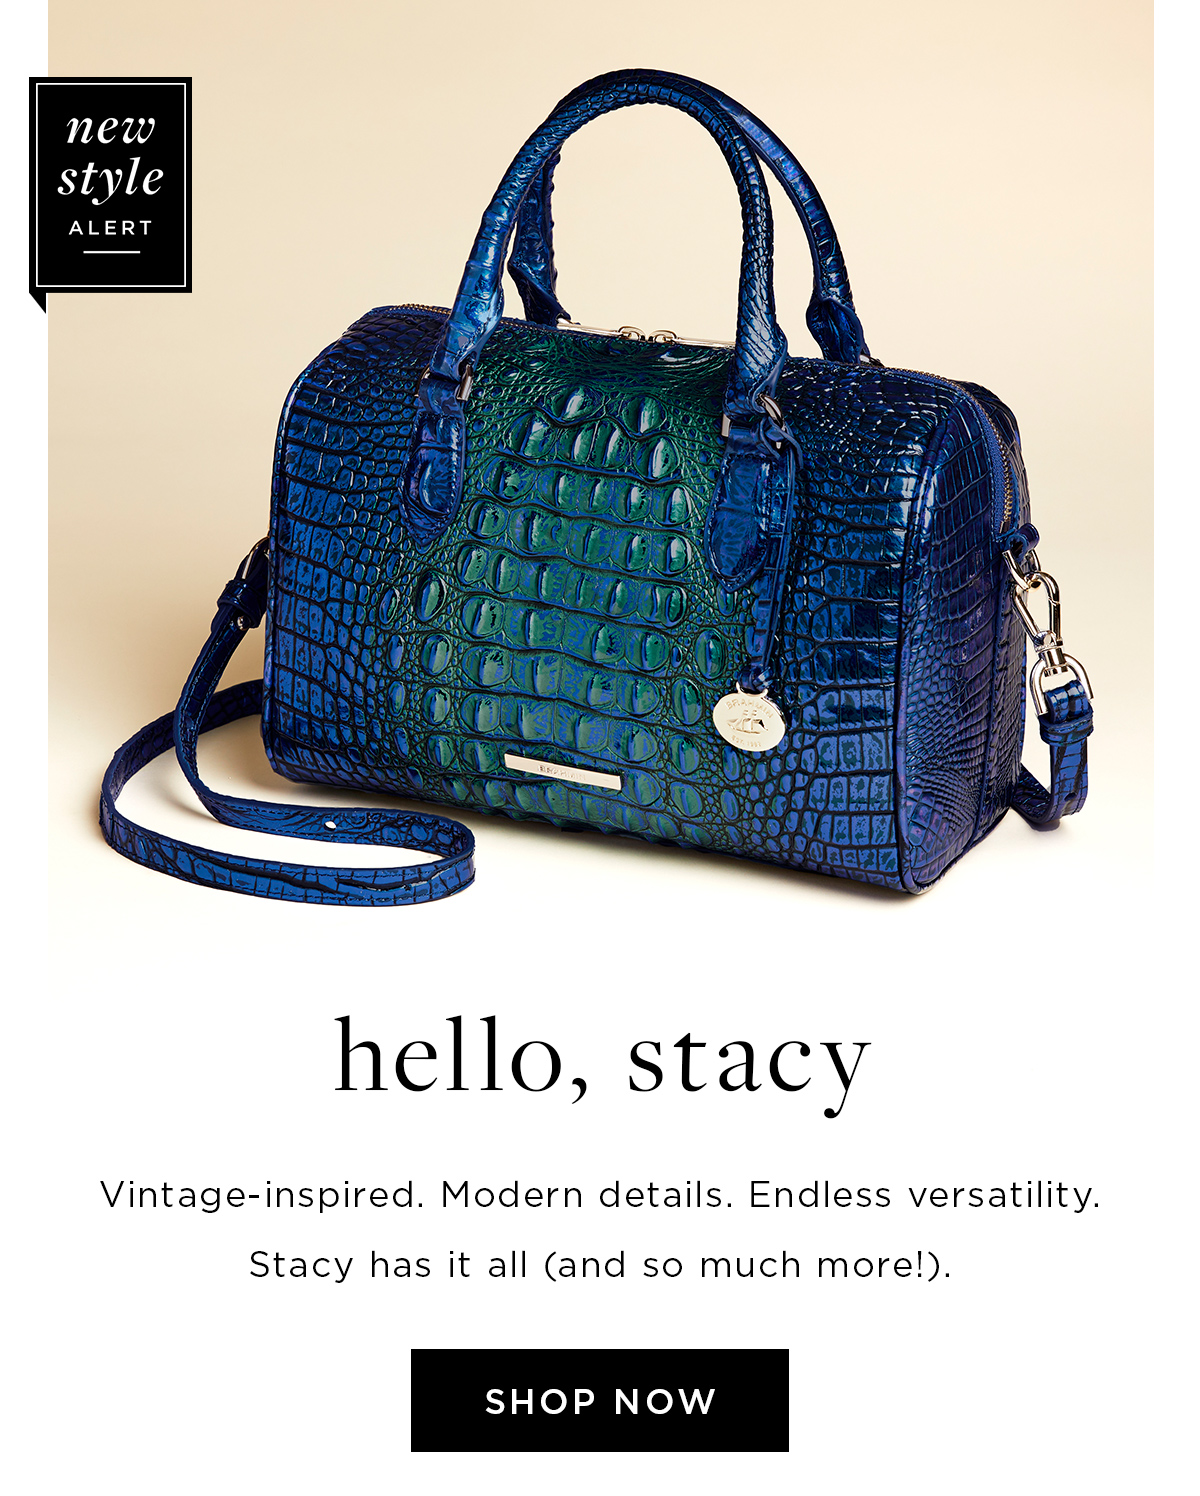 Brahmin Handbags - Satisfy your craving for color. Shop Energy